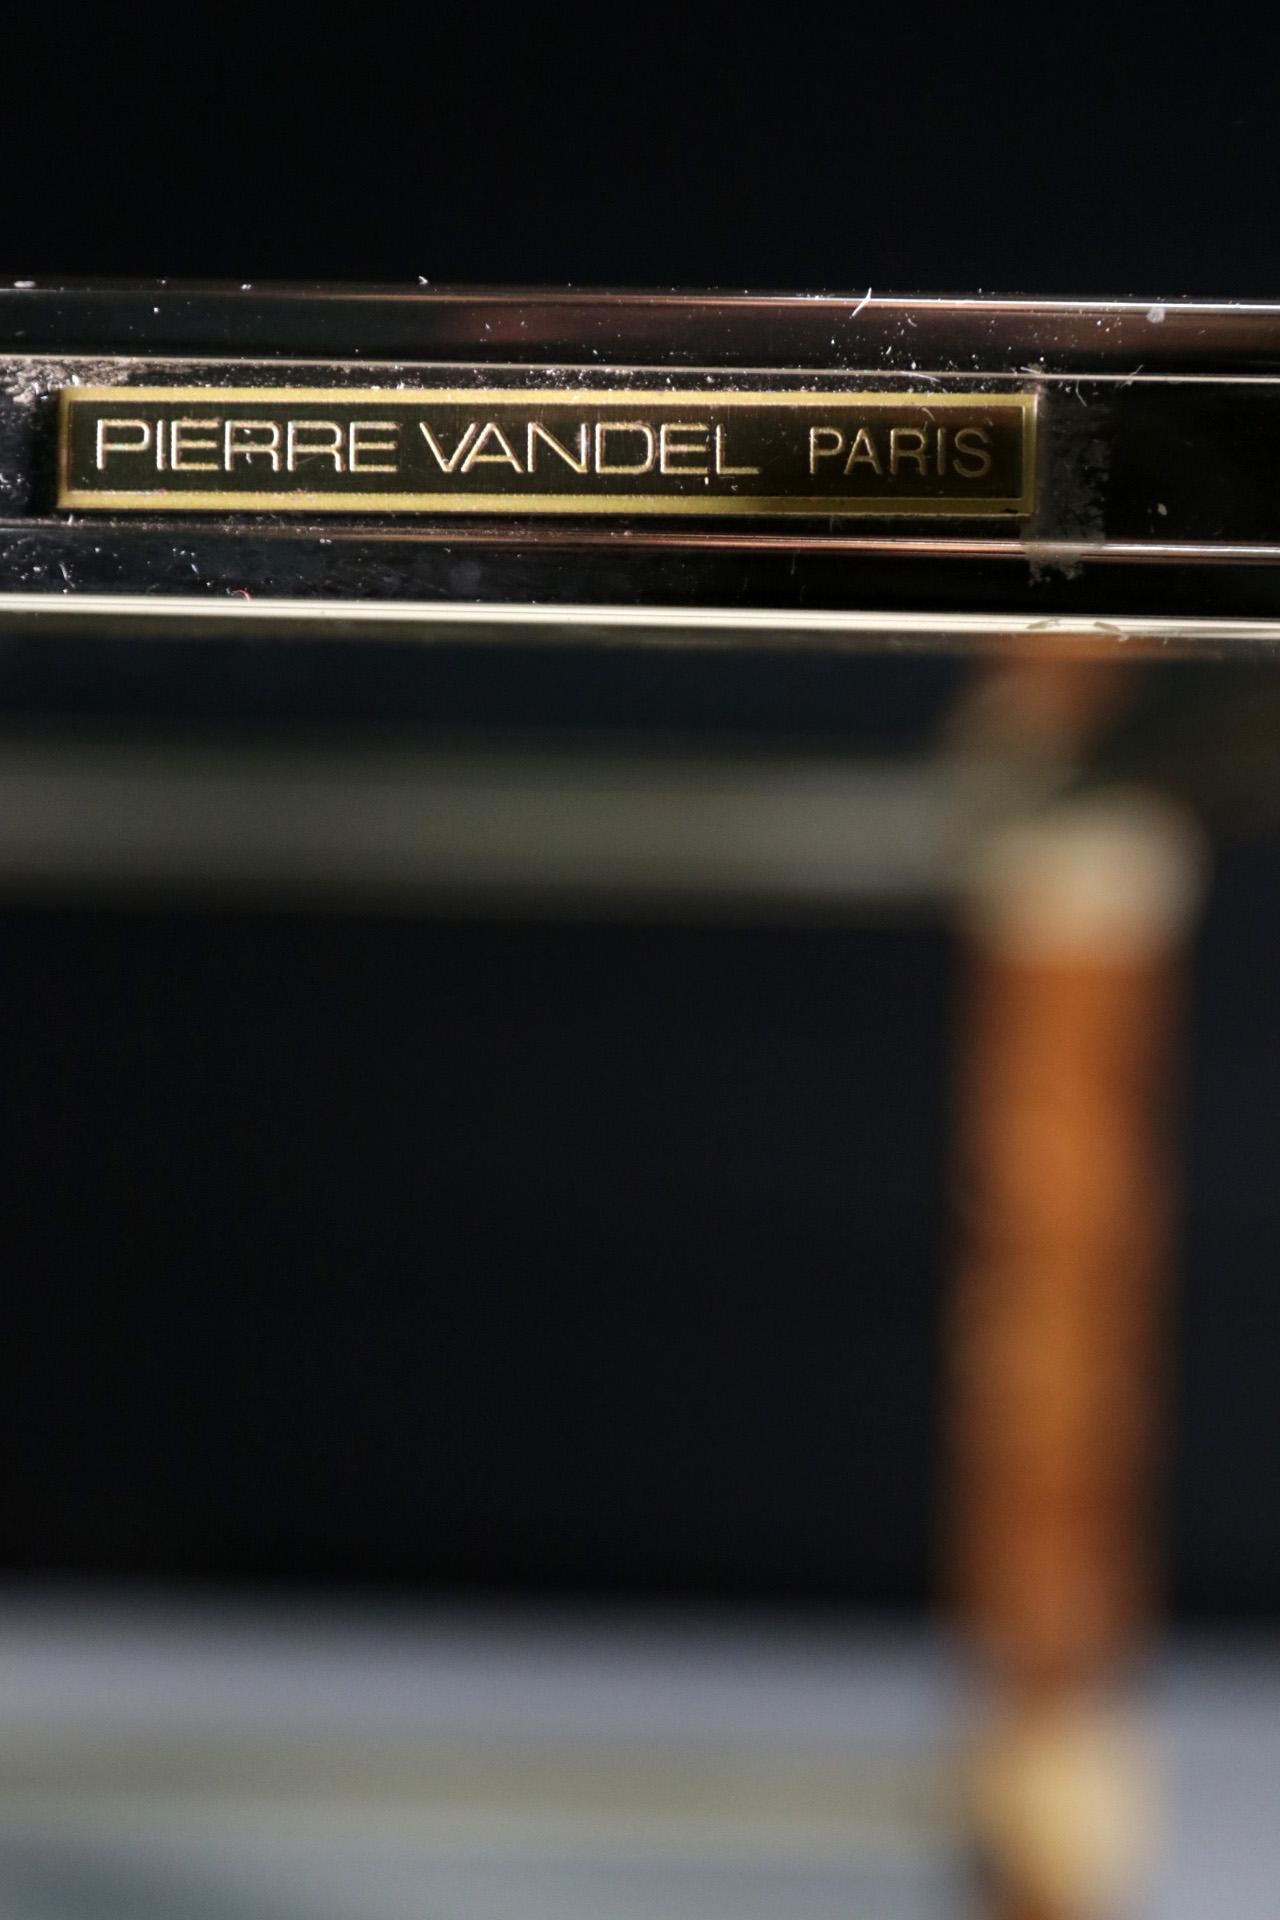 Pierre Vandel Paris two-tier coffee table Mid-Century Modern made in France in the 1970s.
Very elegant.
  
Measurements: W 128 x D 79 x H 40 cm.